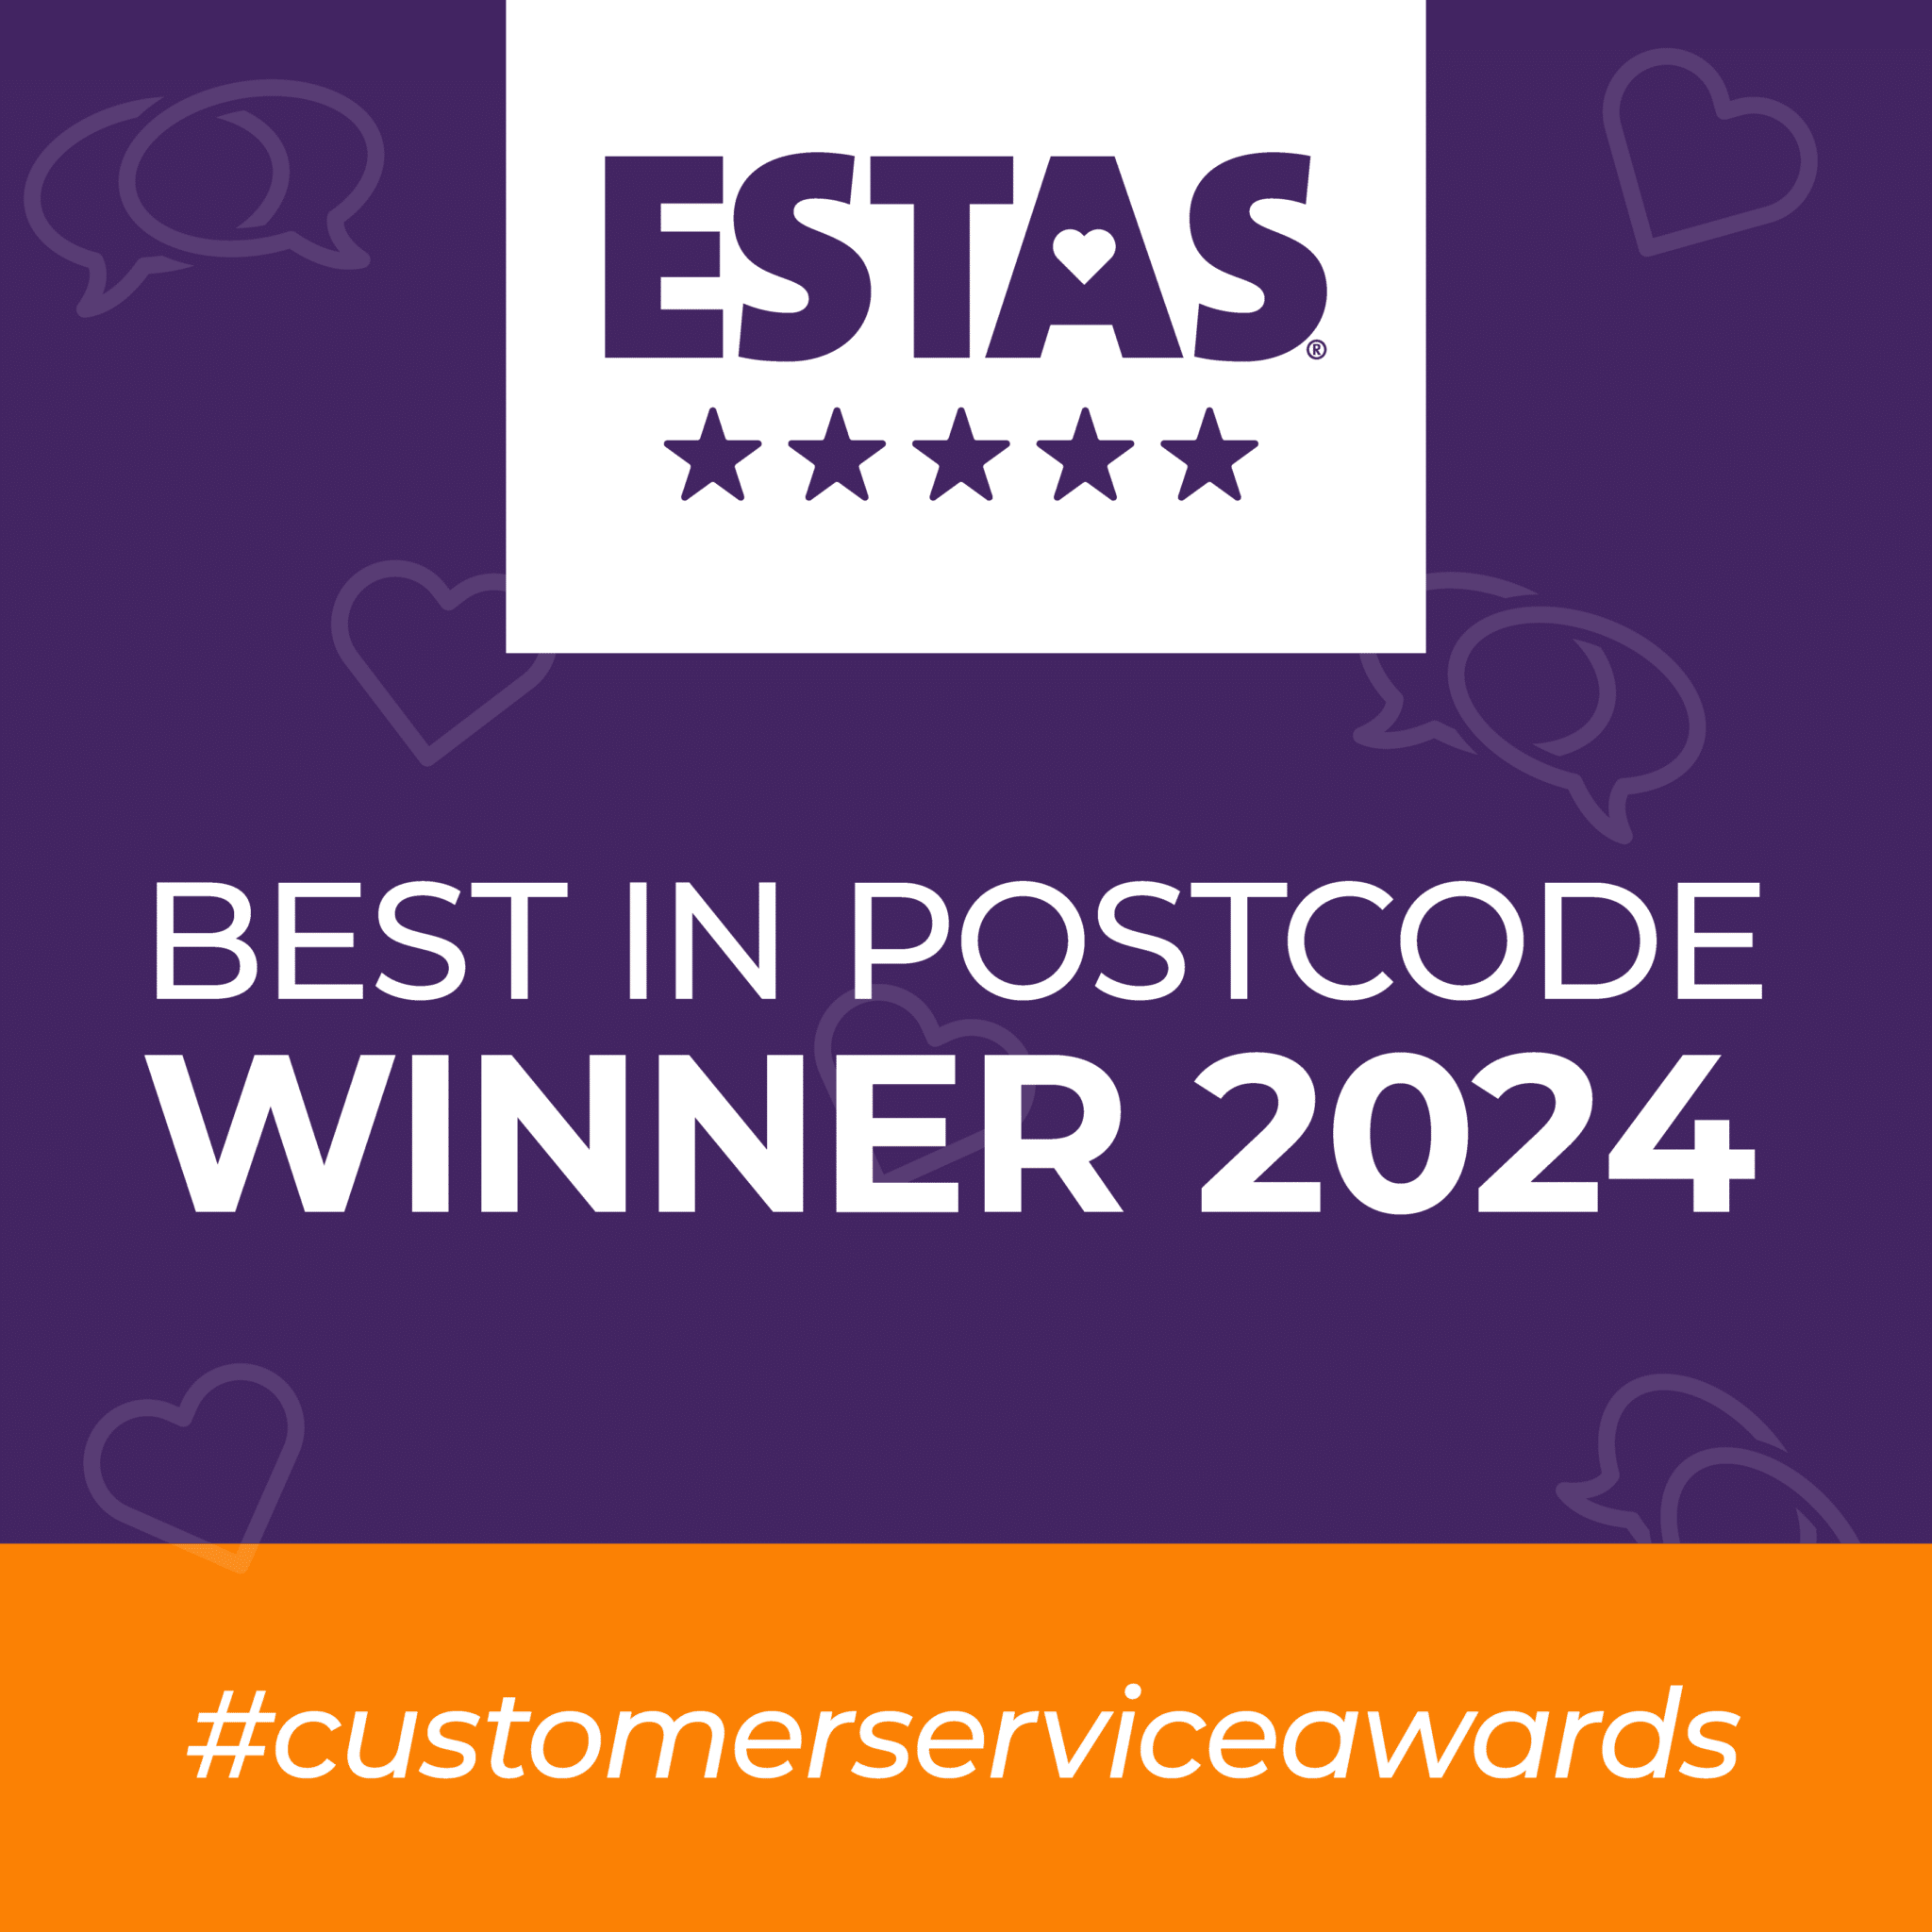 Hodsons win best in Postcode Award for Customer Service